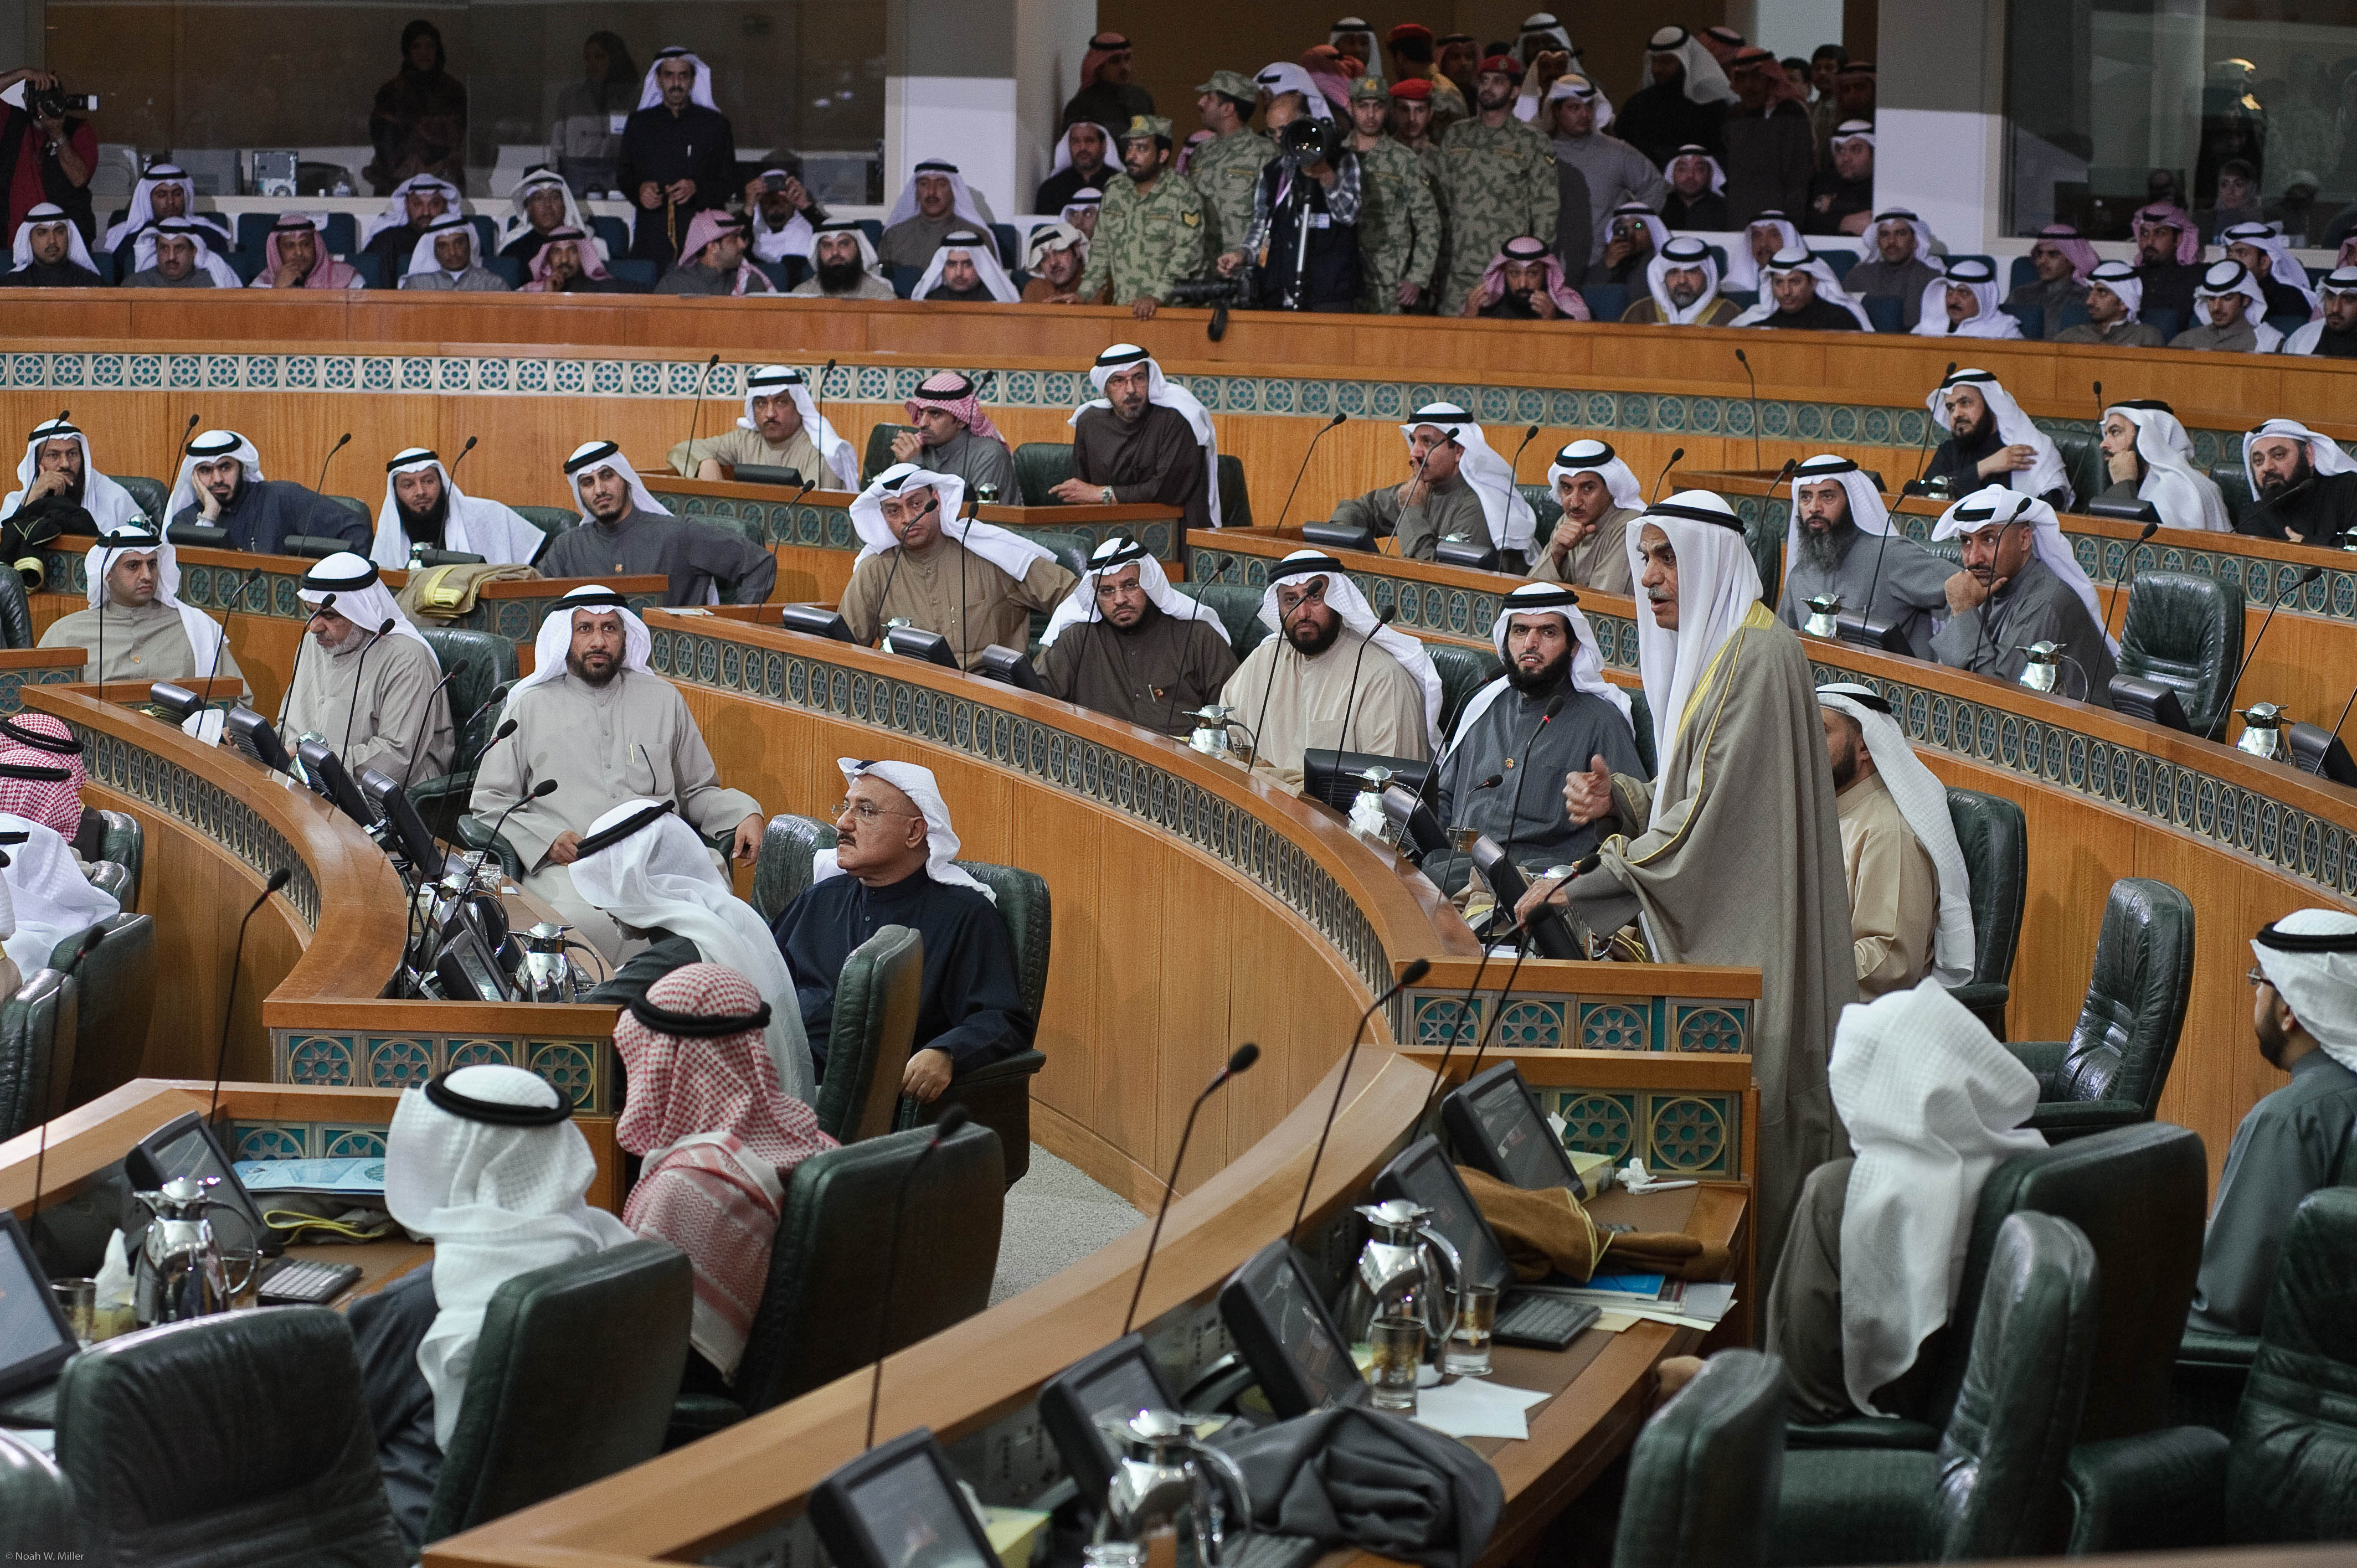 photo credit: Kuwaitelections2012/flickr